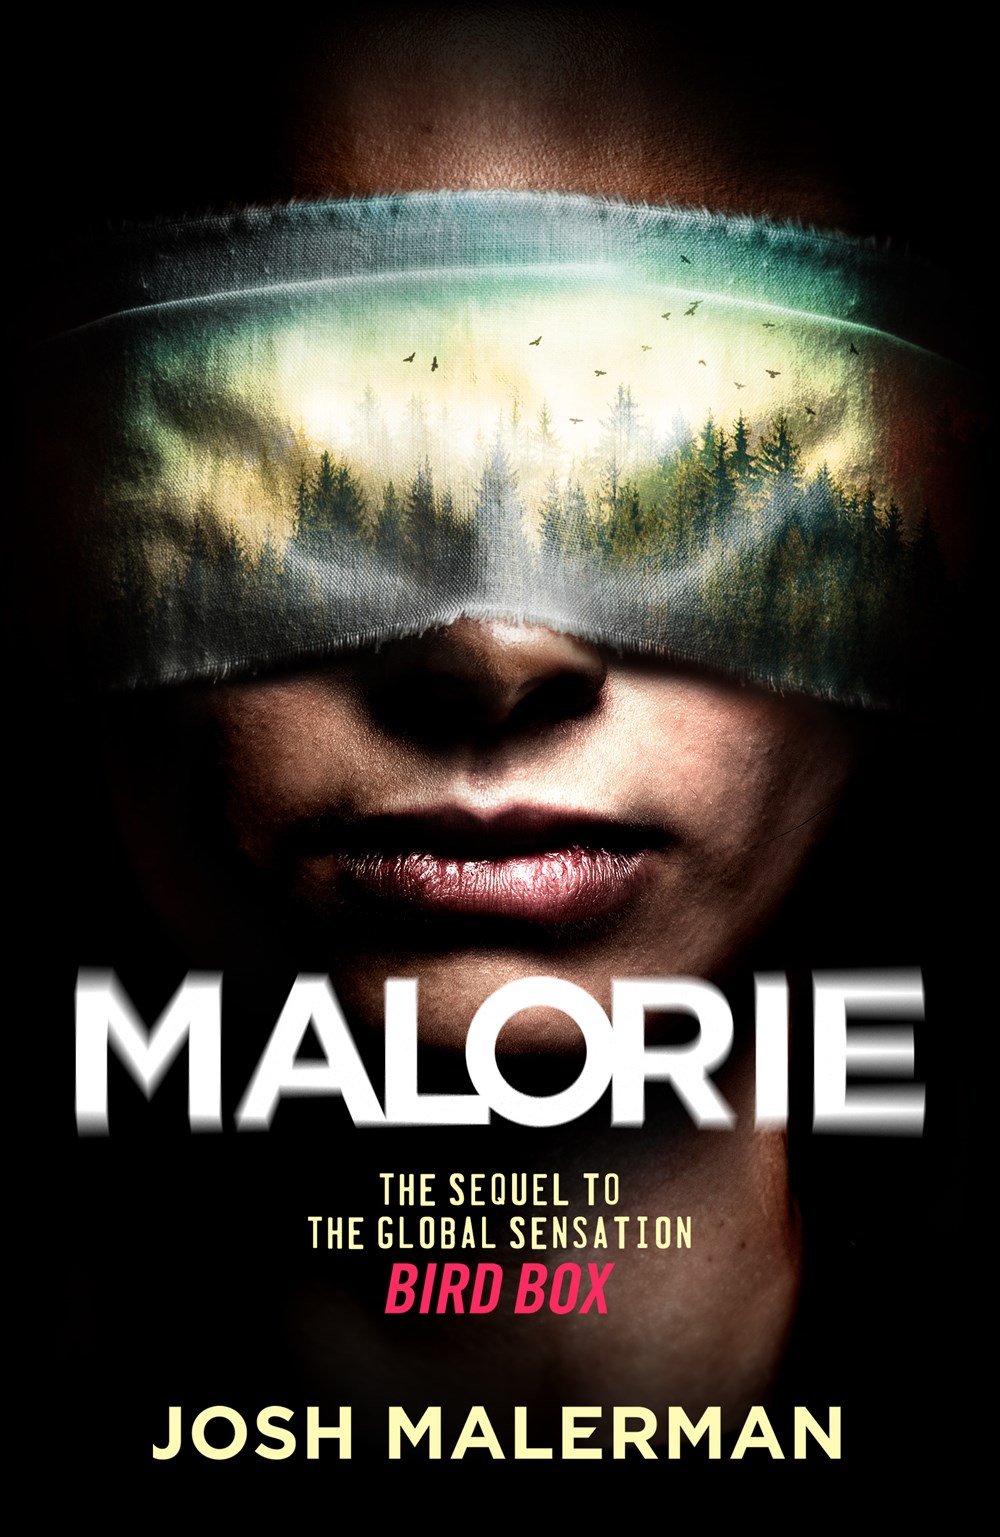 Malorie (Bird Box) by Josh Malerman